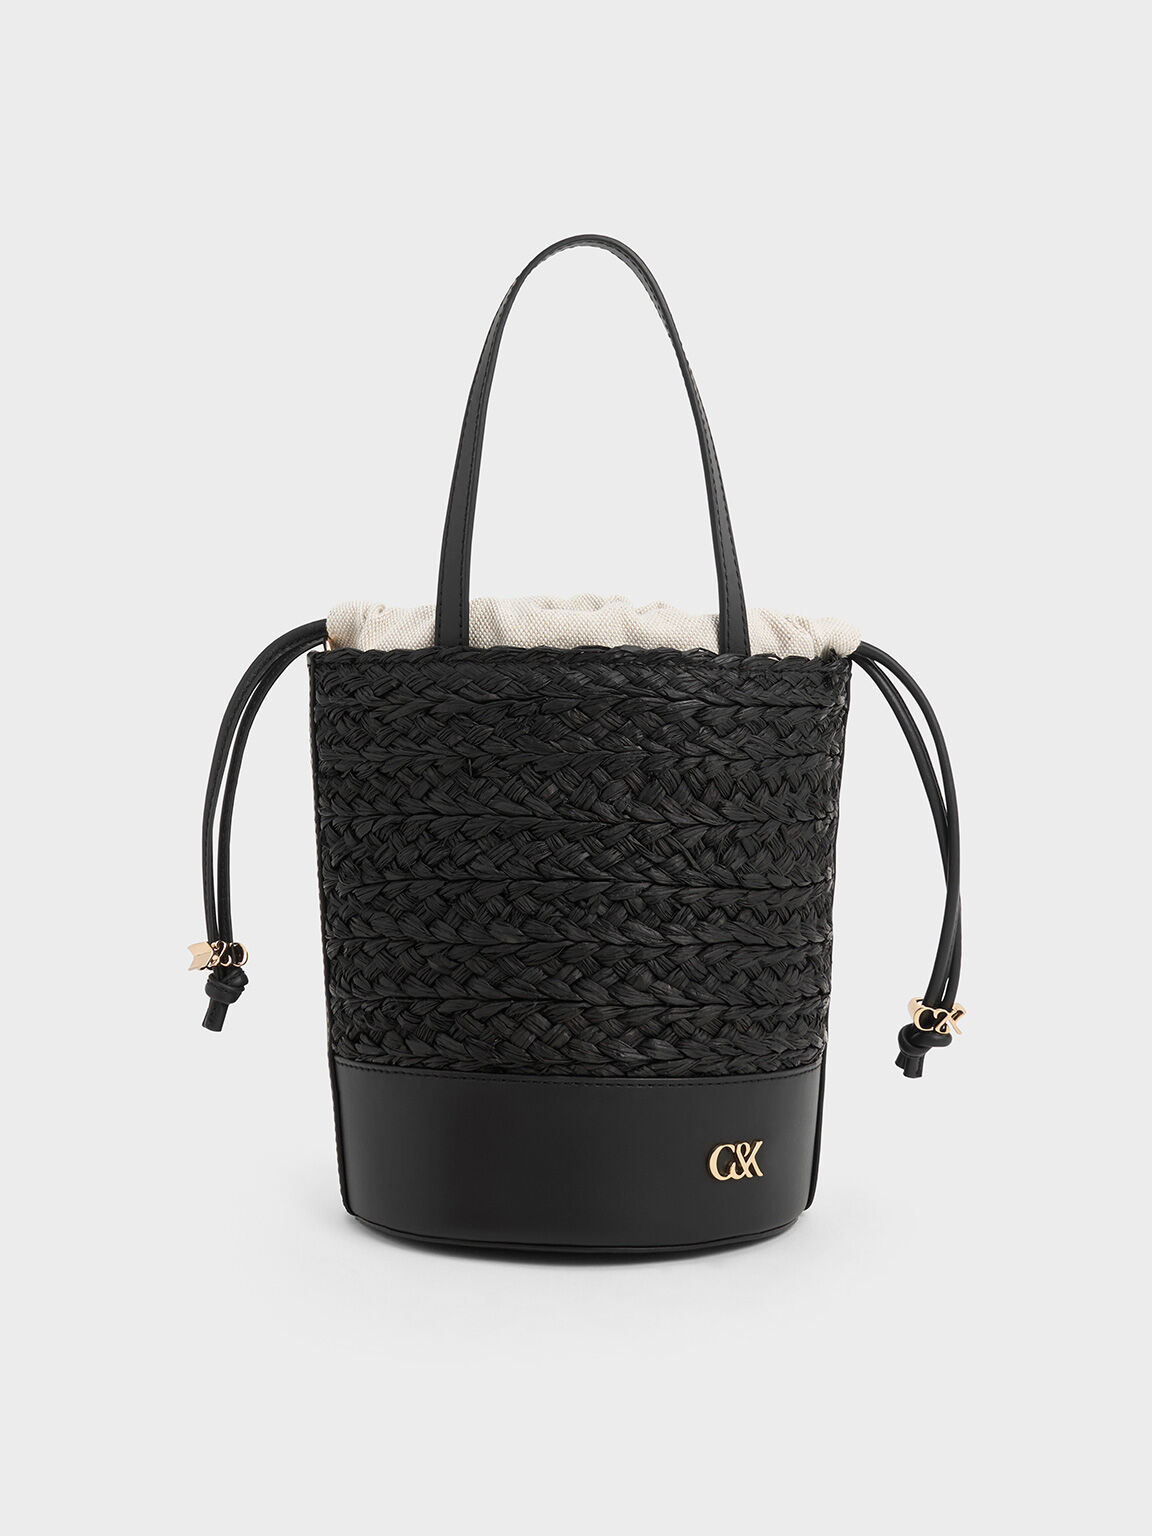 Leather & Raffia Bucket Bag, Black, hi-res